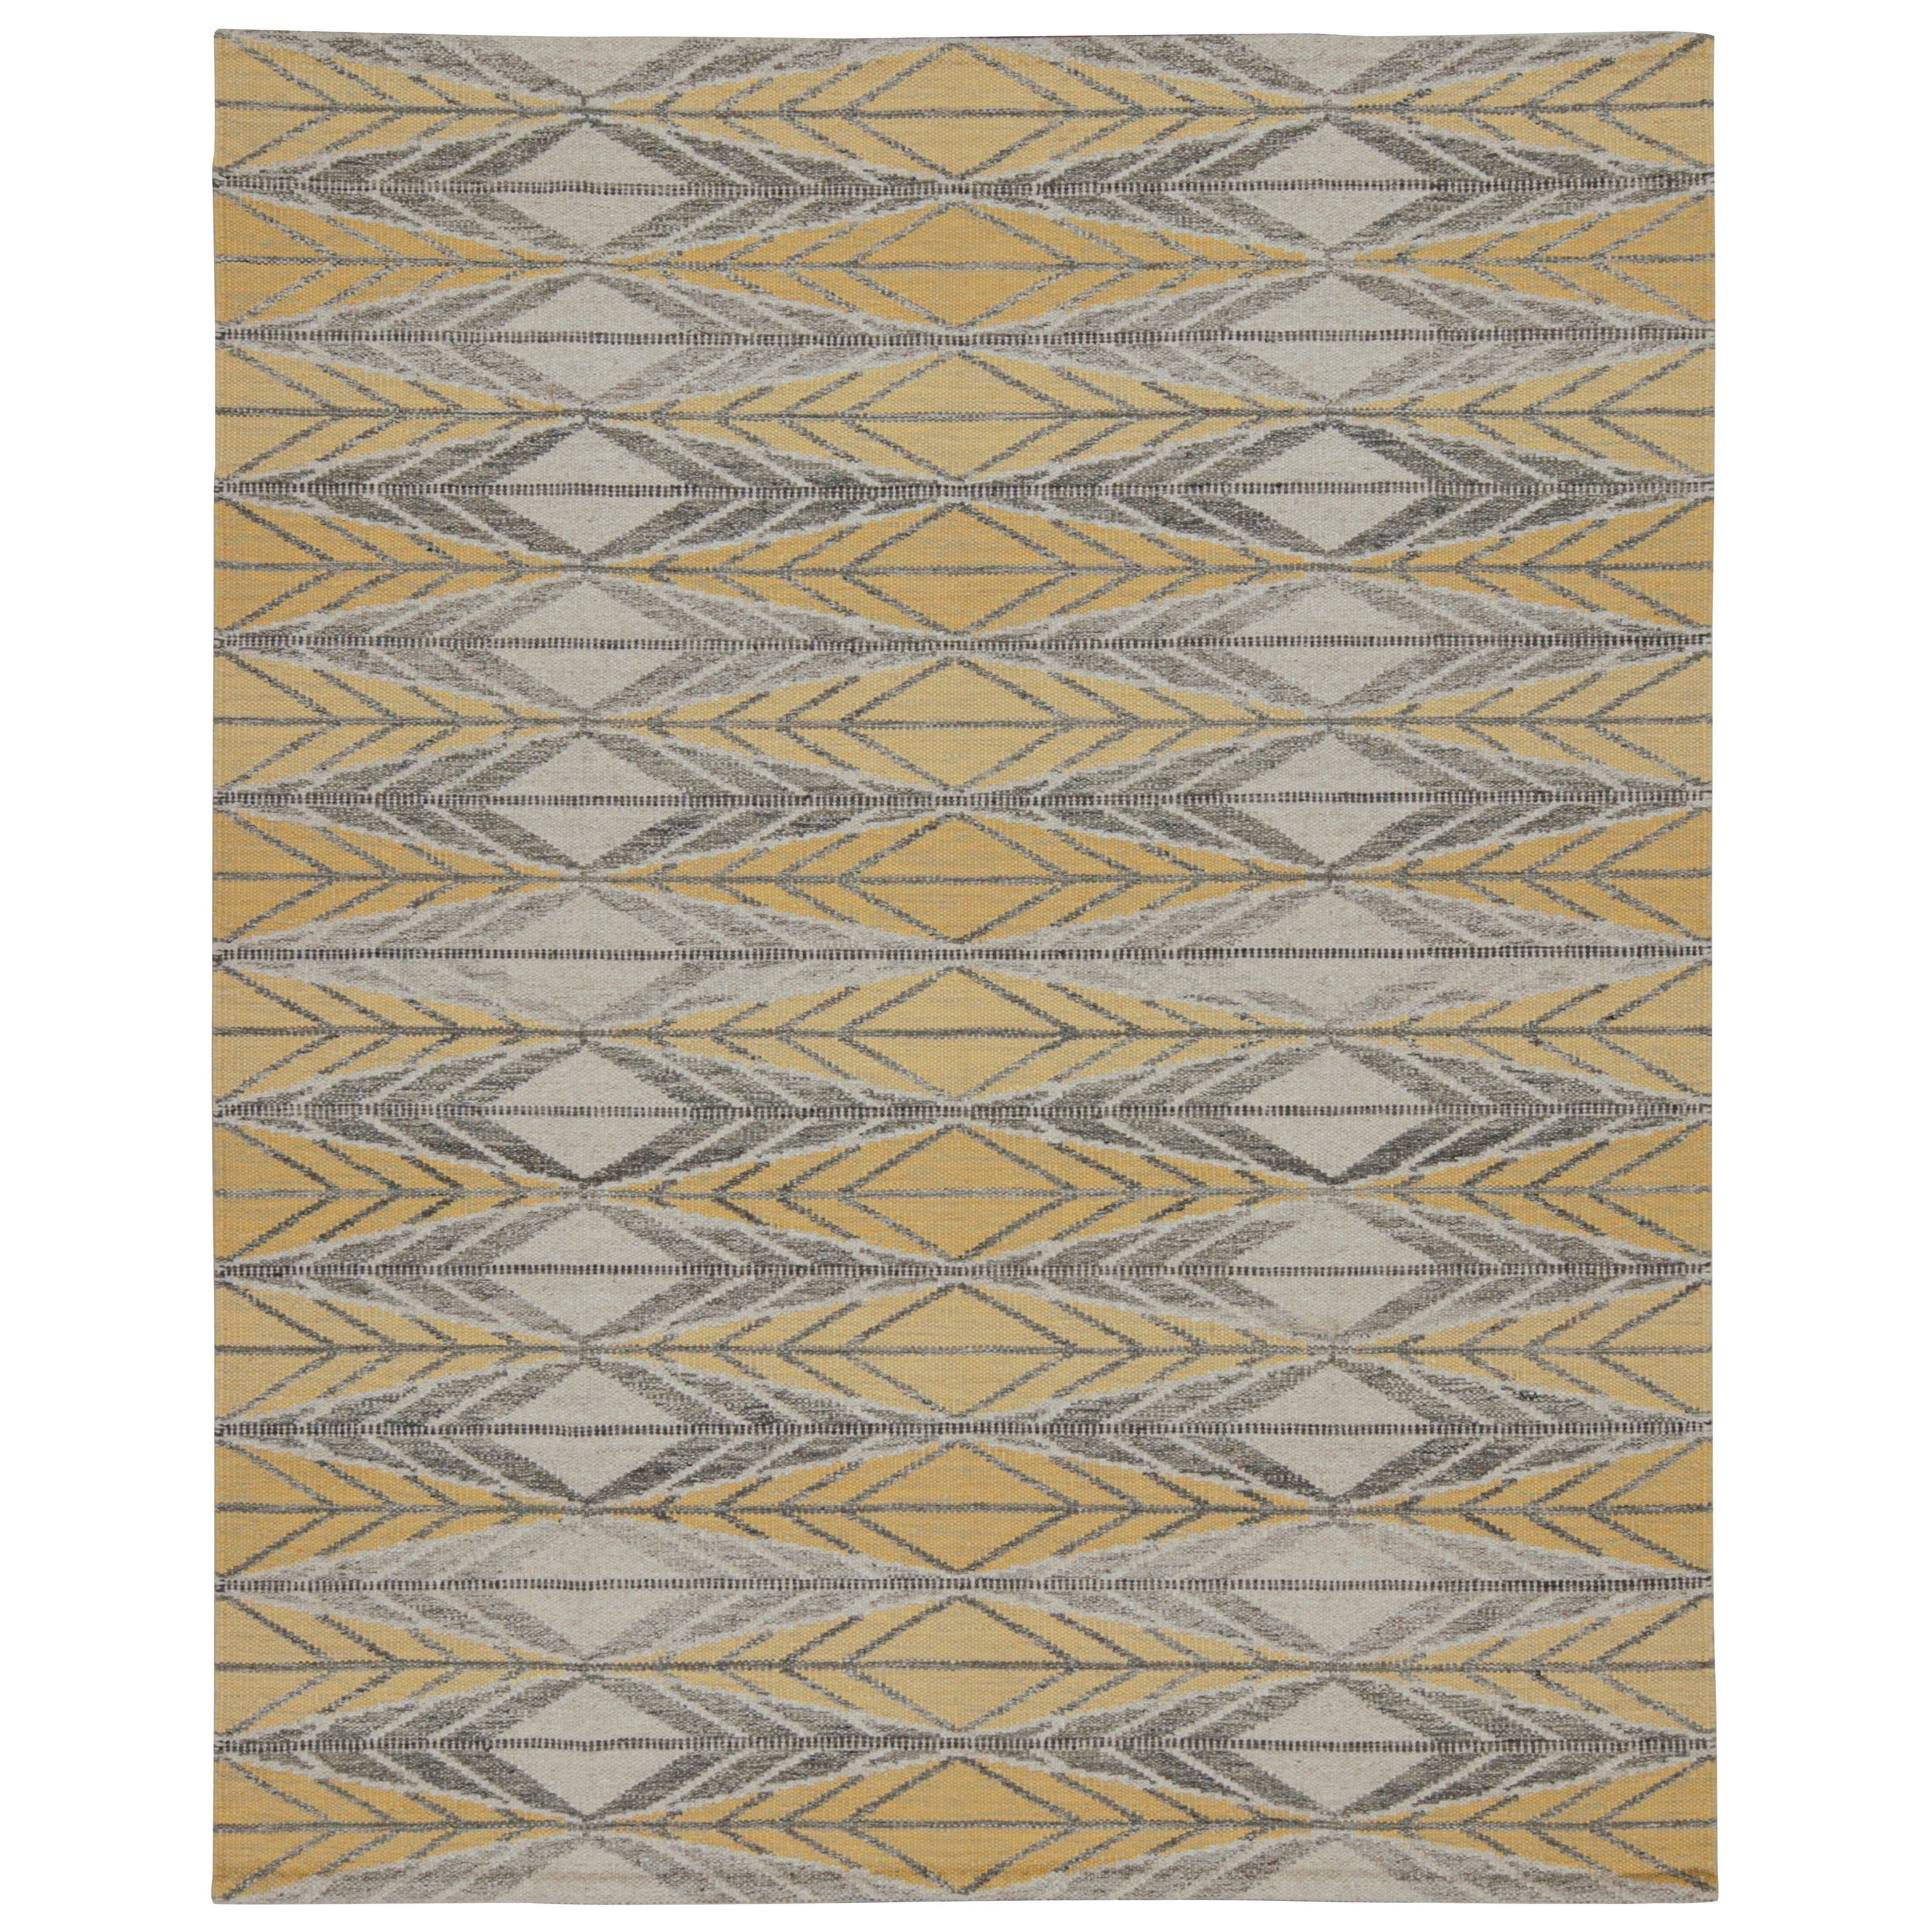 Rug & Kilim's Scandinavian Style Custom Kilim in Gold & Gray Geometric Patterns